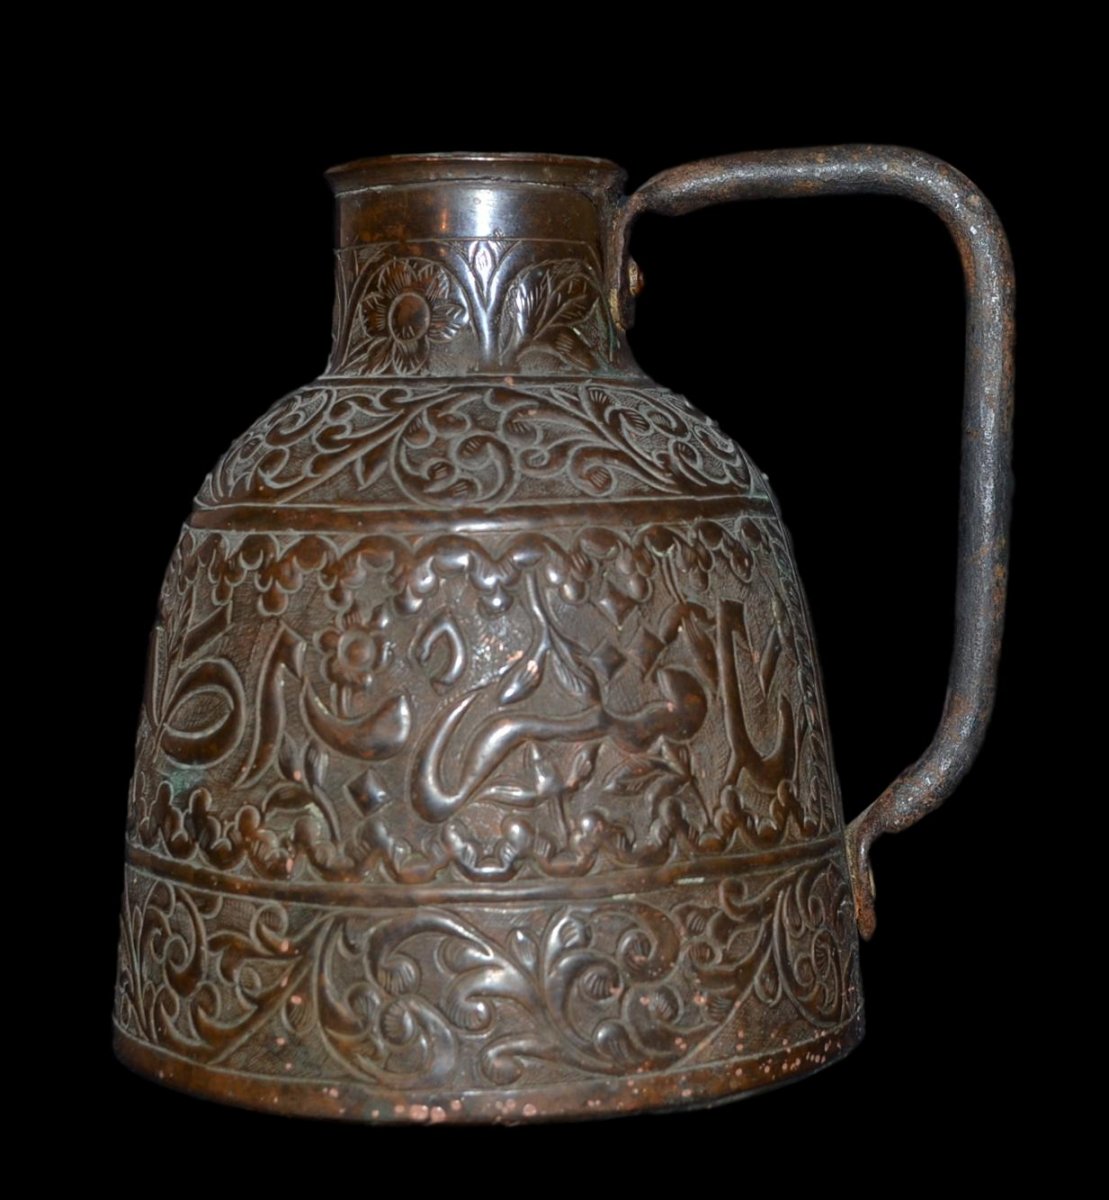 Jug In Kawa, Oriental Art, Copper Repoussé, XVIIIth Century, Persia?